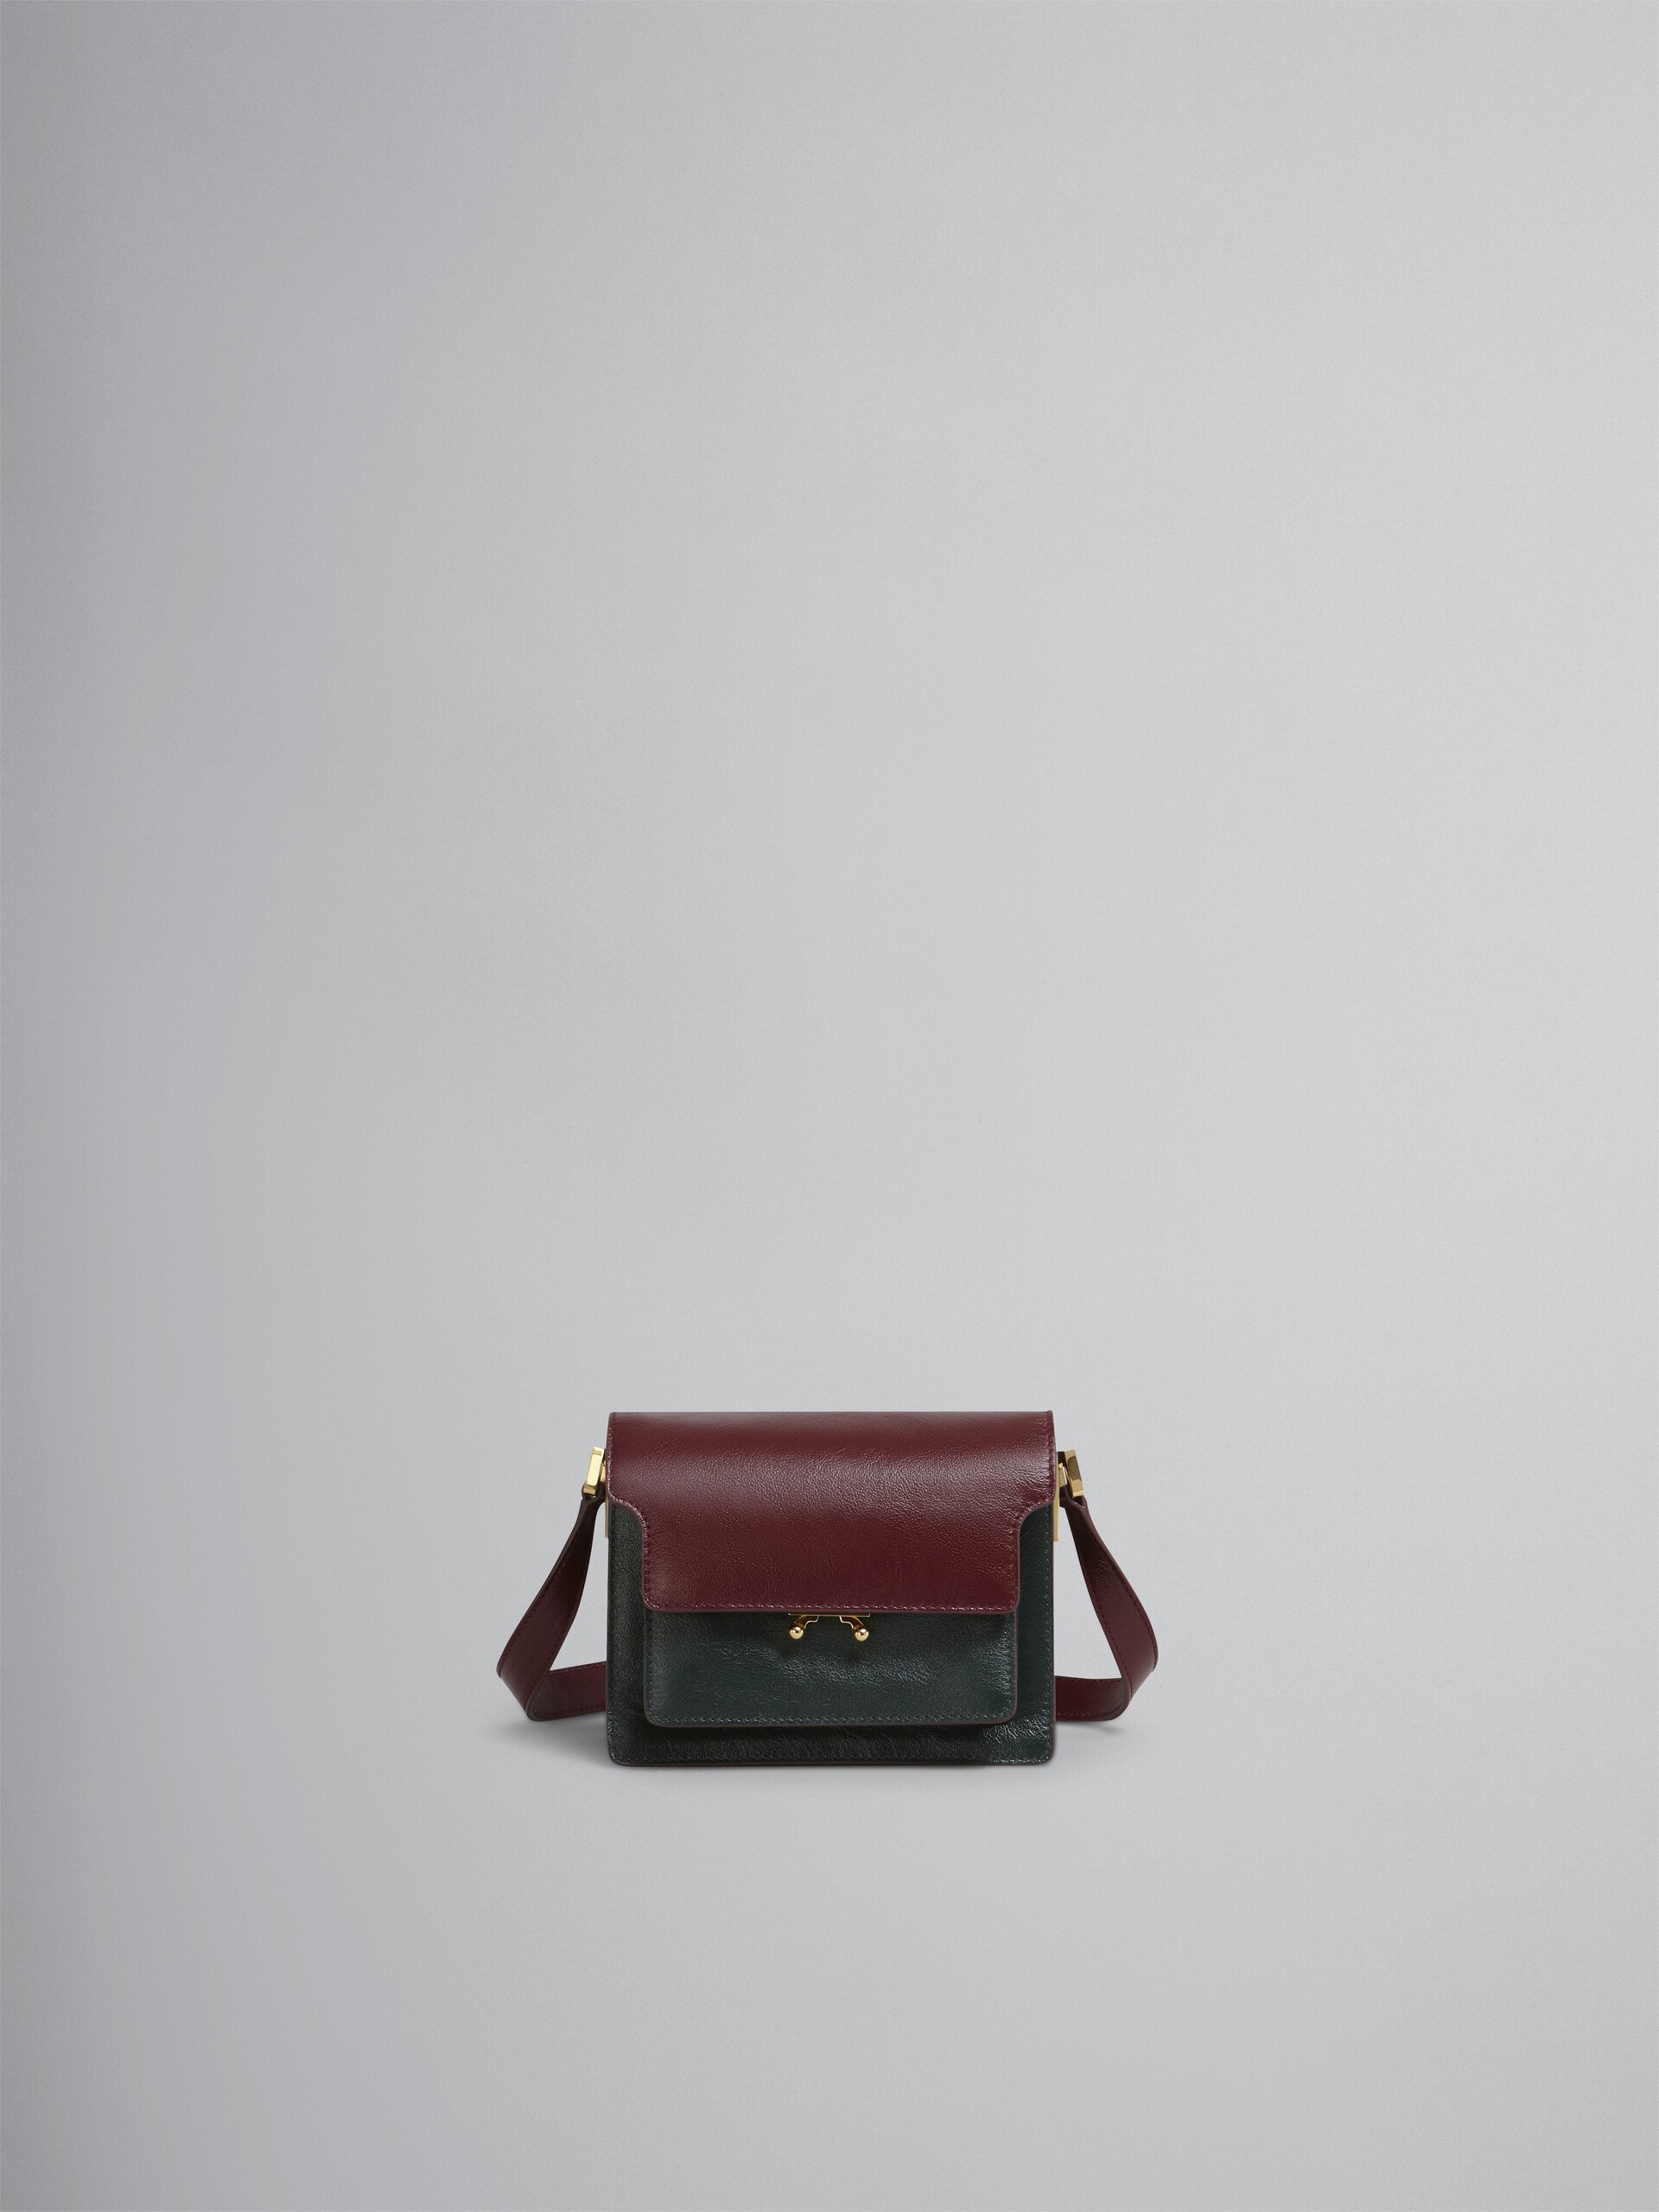 TRUNK SOFT bag in green and burgundy tumbled calf - Shoulder Bag - Image 1